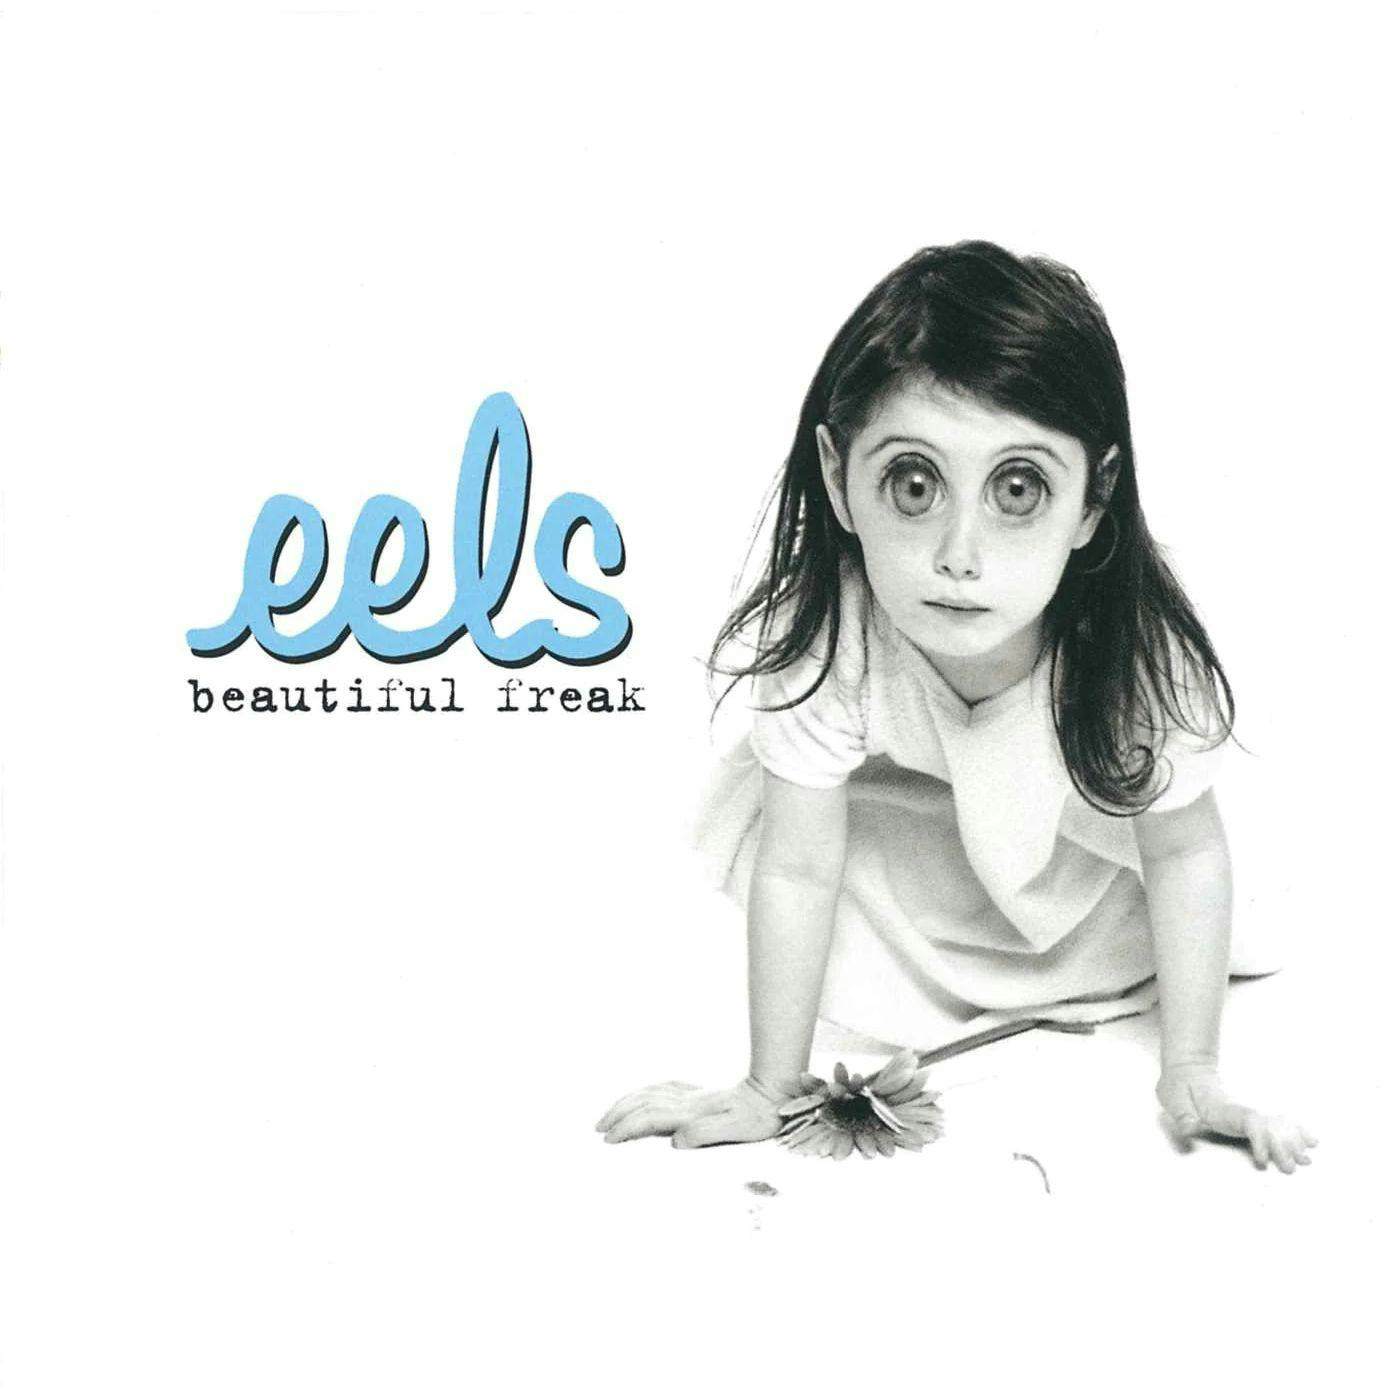 Eels Beautiful Freak (Blue) Vinyl Record